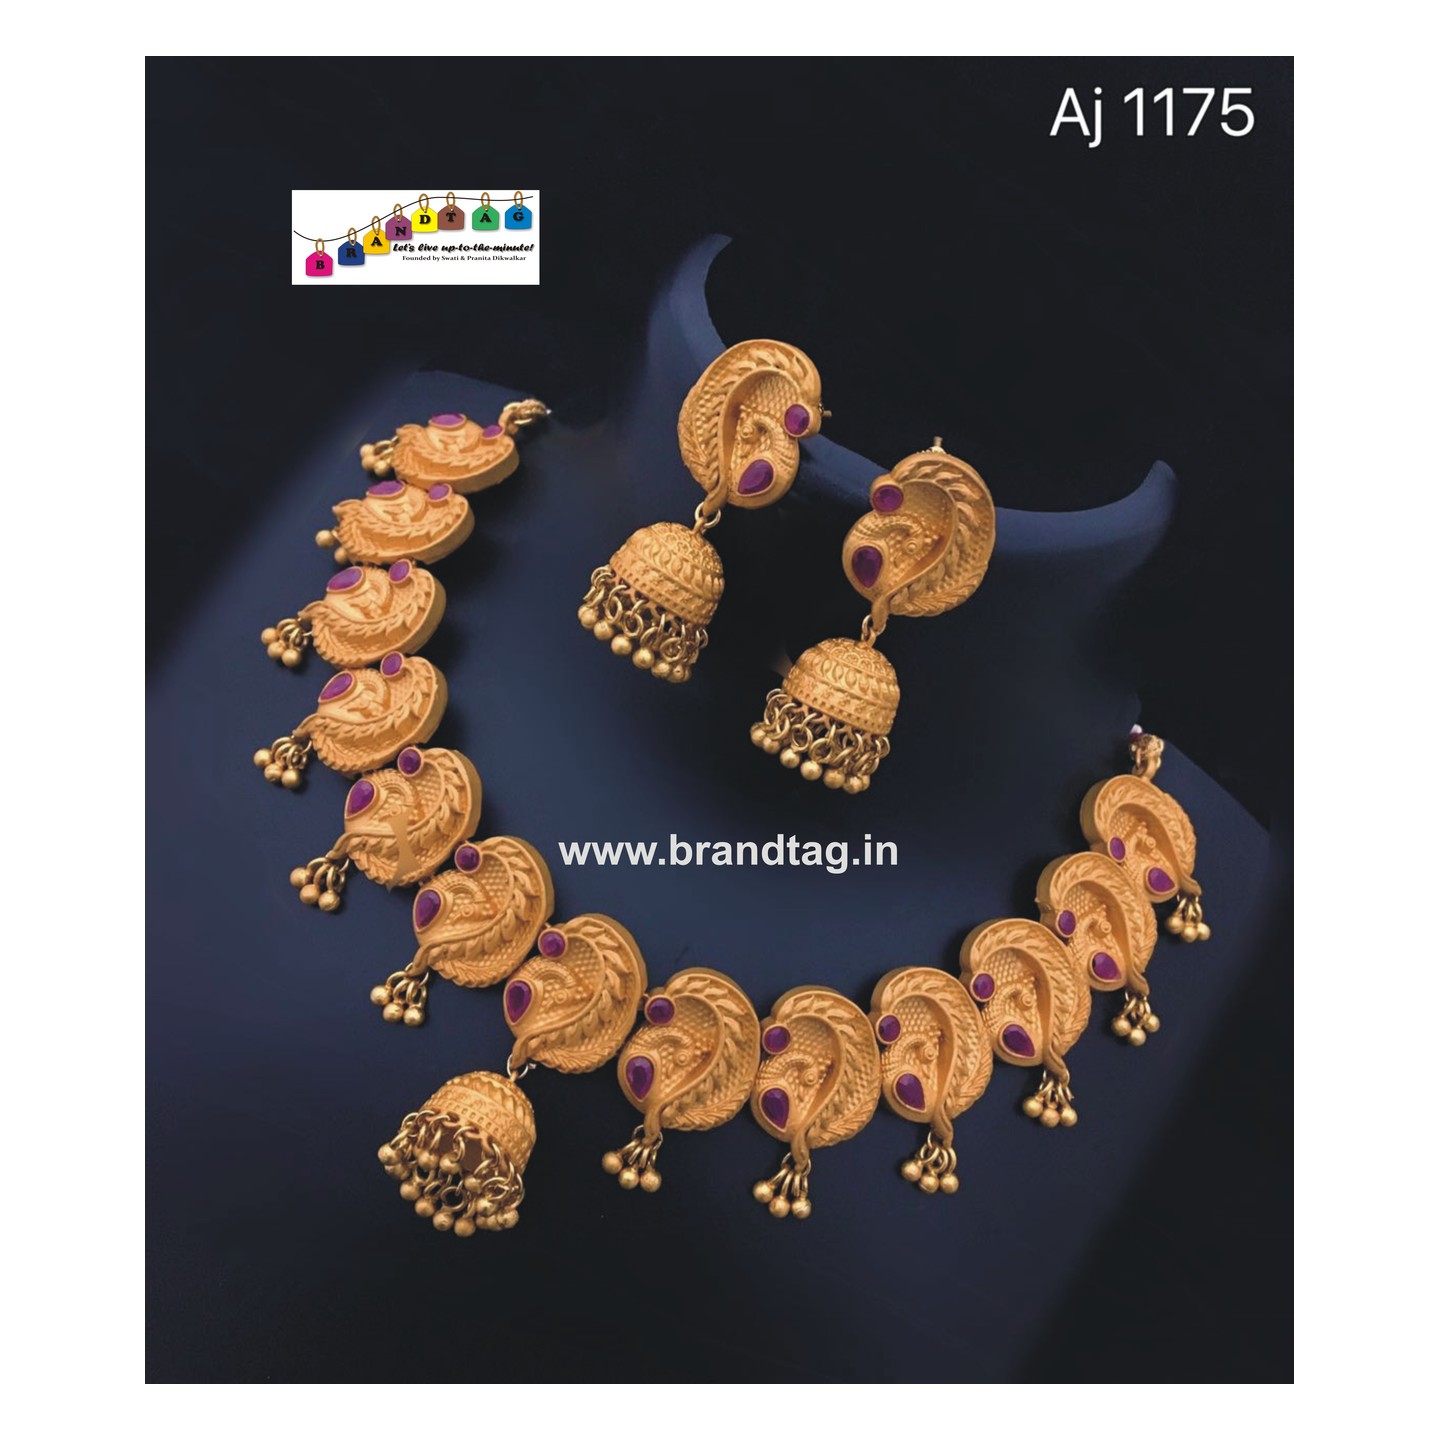 Special Ganesh Festival Collection ....Captivating Big Golden Koyari Single layered Necklace set!! 